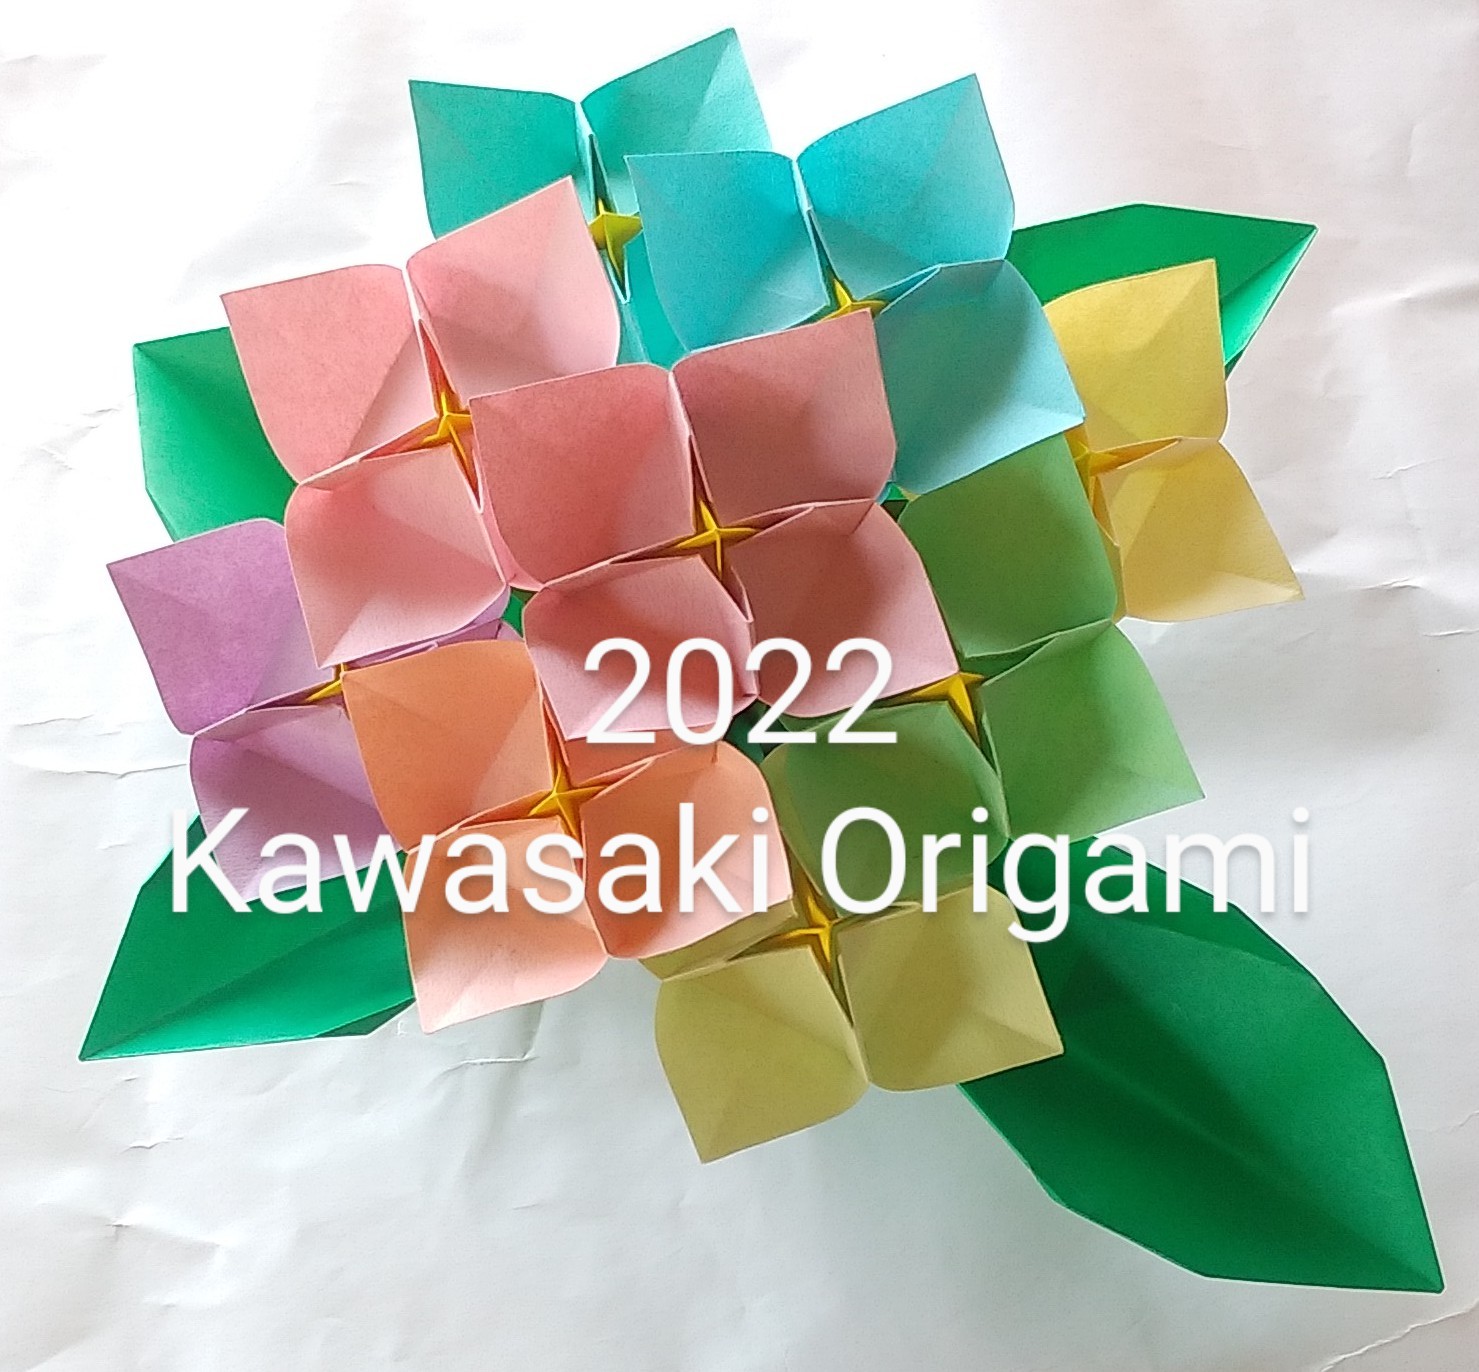 2022/06/15(Wed) 15:16「モネの紫陽花」川崎敏和
（創作者 Author：川崎敏和,　製作者 Folder：川崎敏和,　出典 Source：2022折り紙キット）
 「華やかな紫陽花」をパステルカラーで折りました。